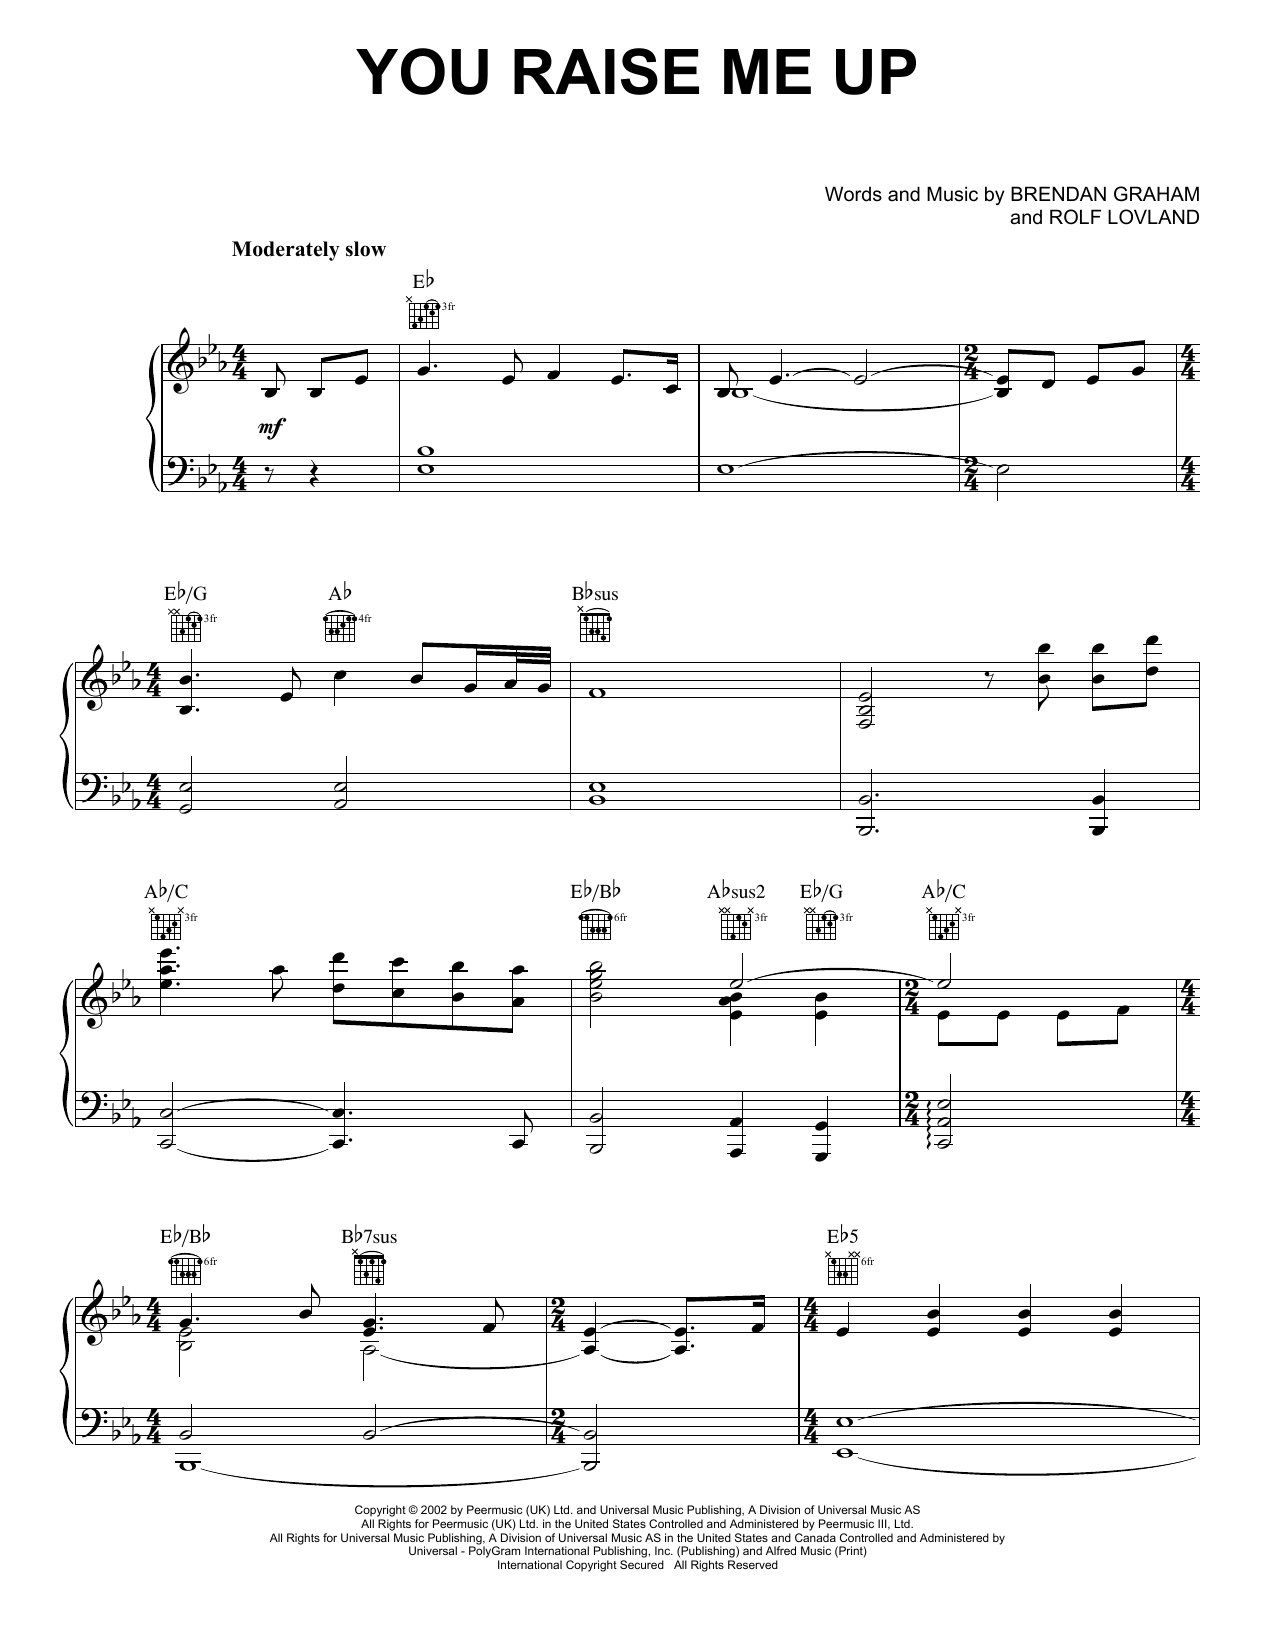 Josh Groban You Raise Me Up Sheet Music Notes & Chords for Easy Ukulele Tab - Download or Print PDF